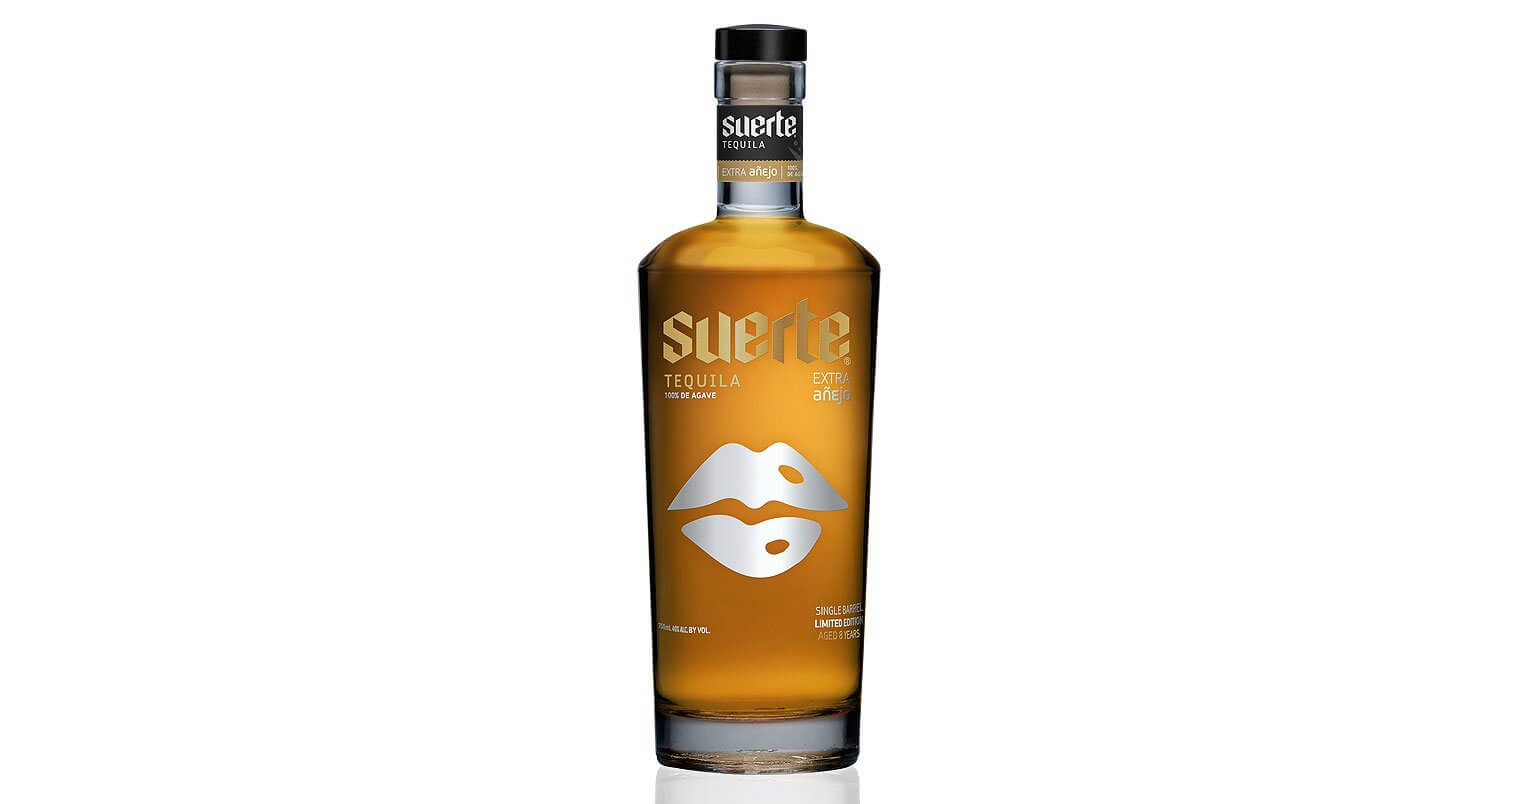 Suerte Tequila, bottle on white, featured image